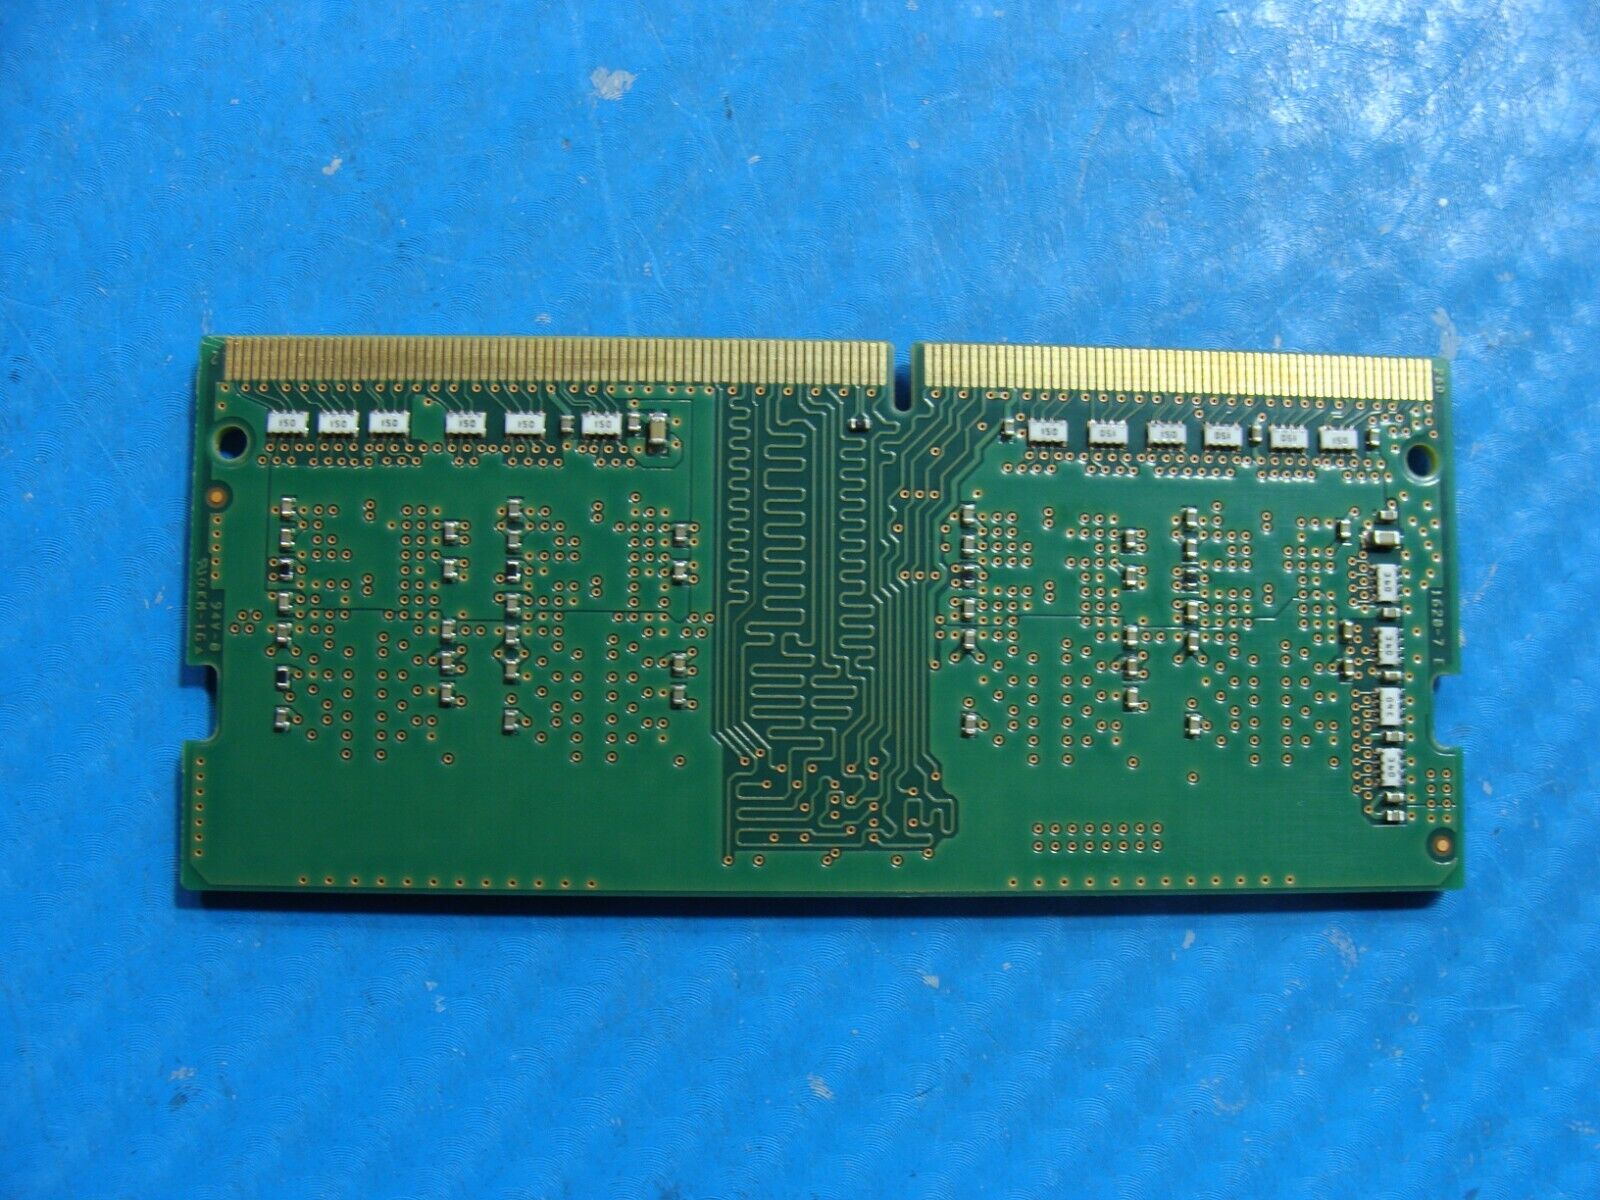 HP m3-u001dx SK Hynix 2GB 1Rx16 PC4-2133P Memory RAM SO-DIMM HMA425S6AFR6N-TF